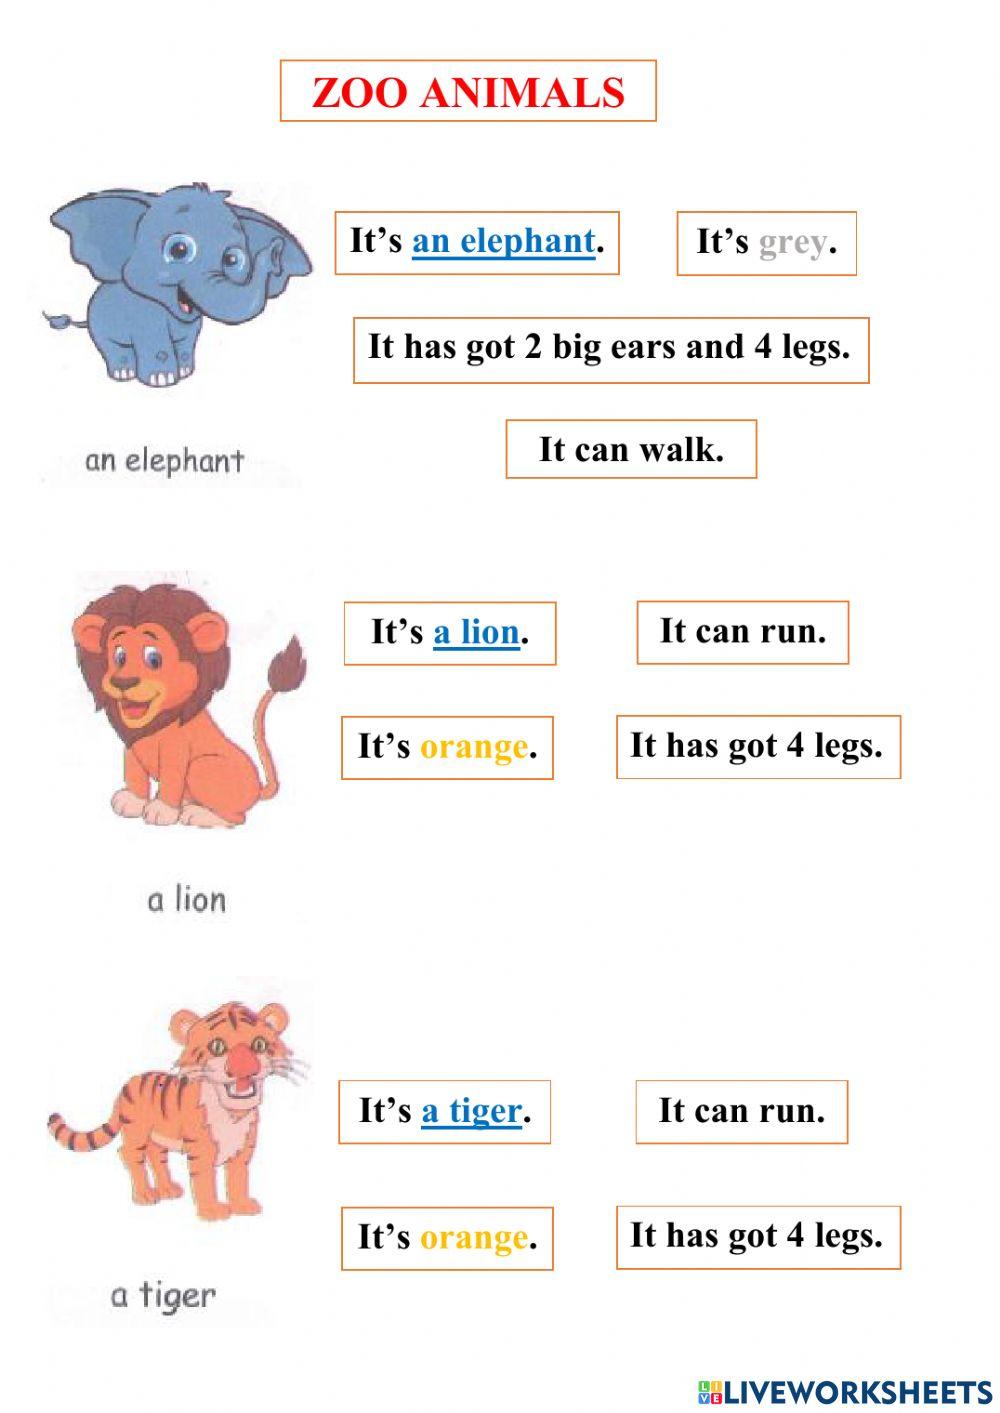 Zoo animals - lesson